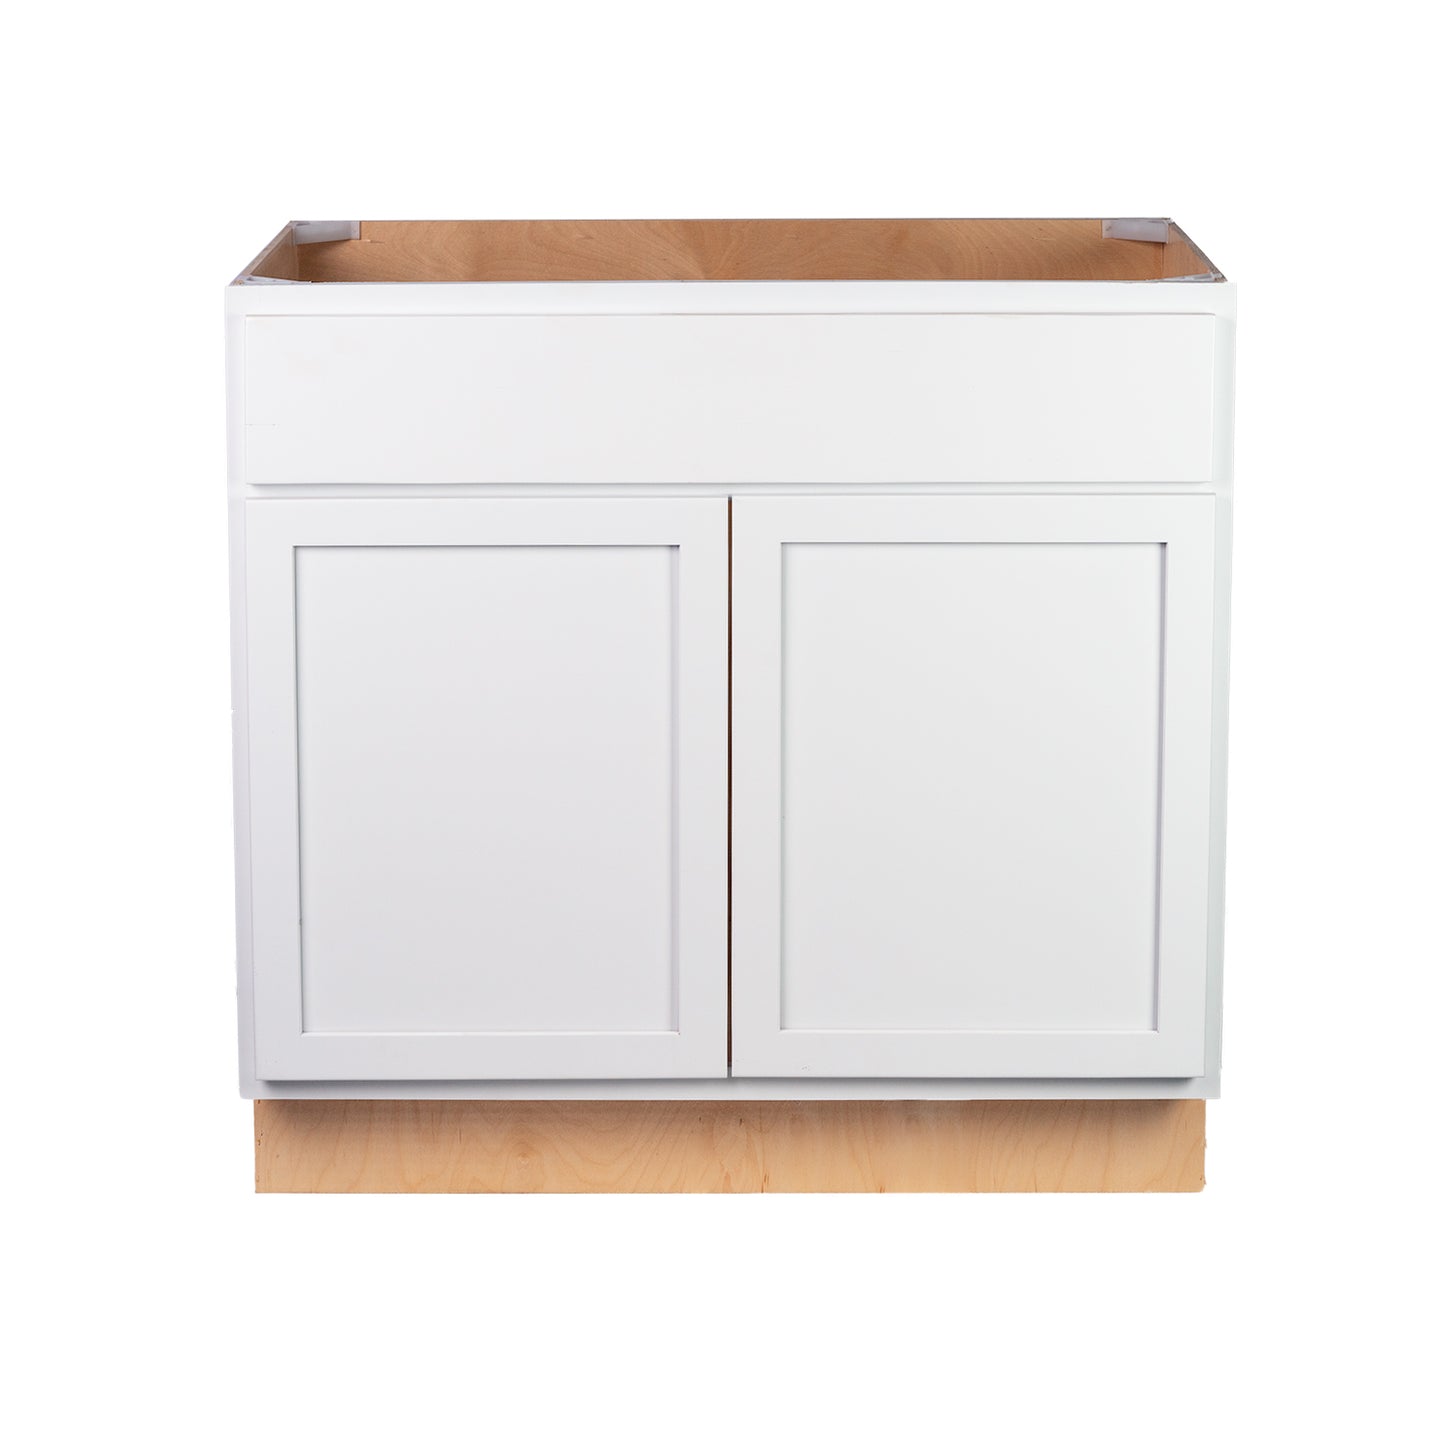 Quicklock RTA (Ready-to-Assemble) Pure White Base Cabinet | 36"Wx34.5"Hx24"D